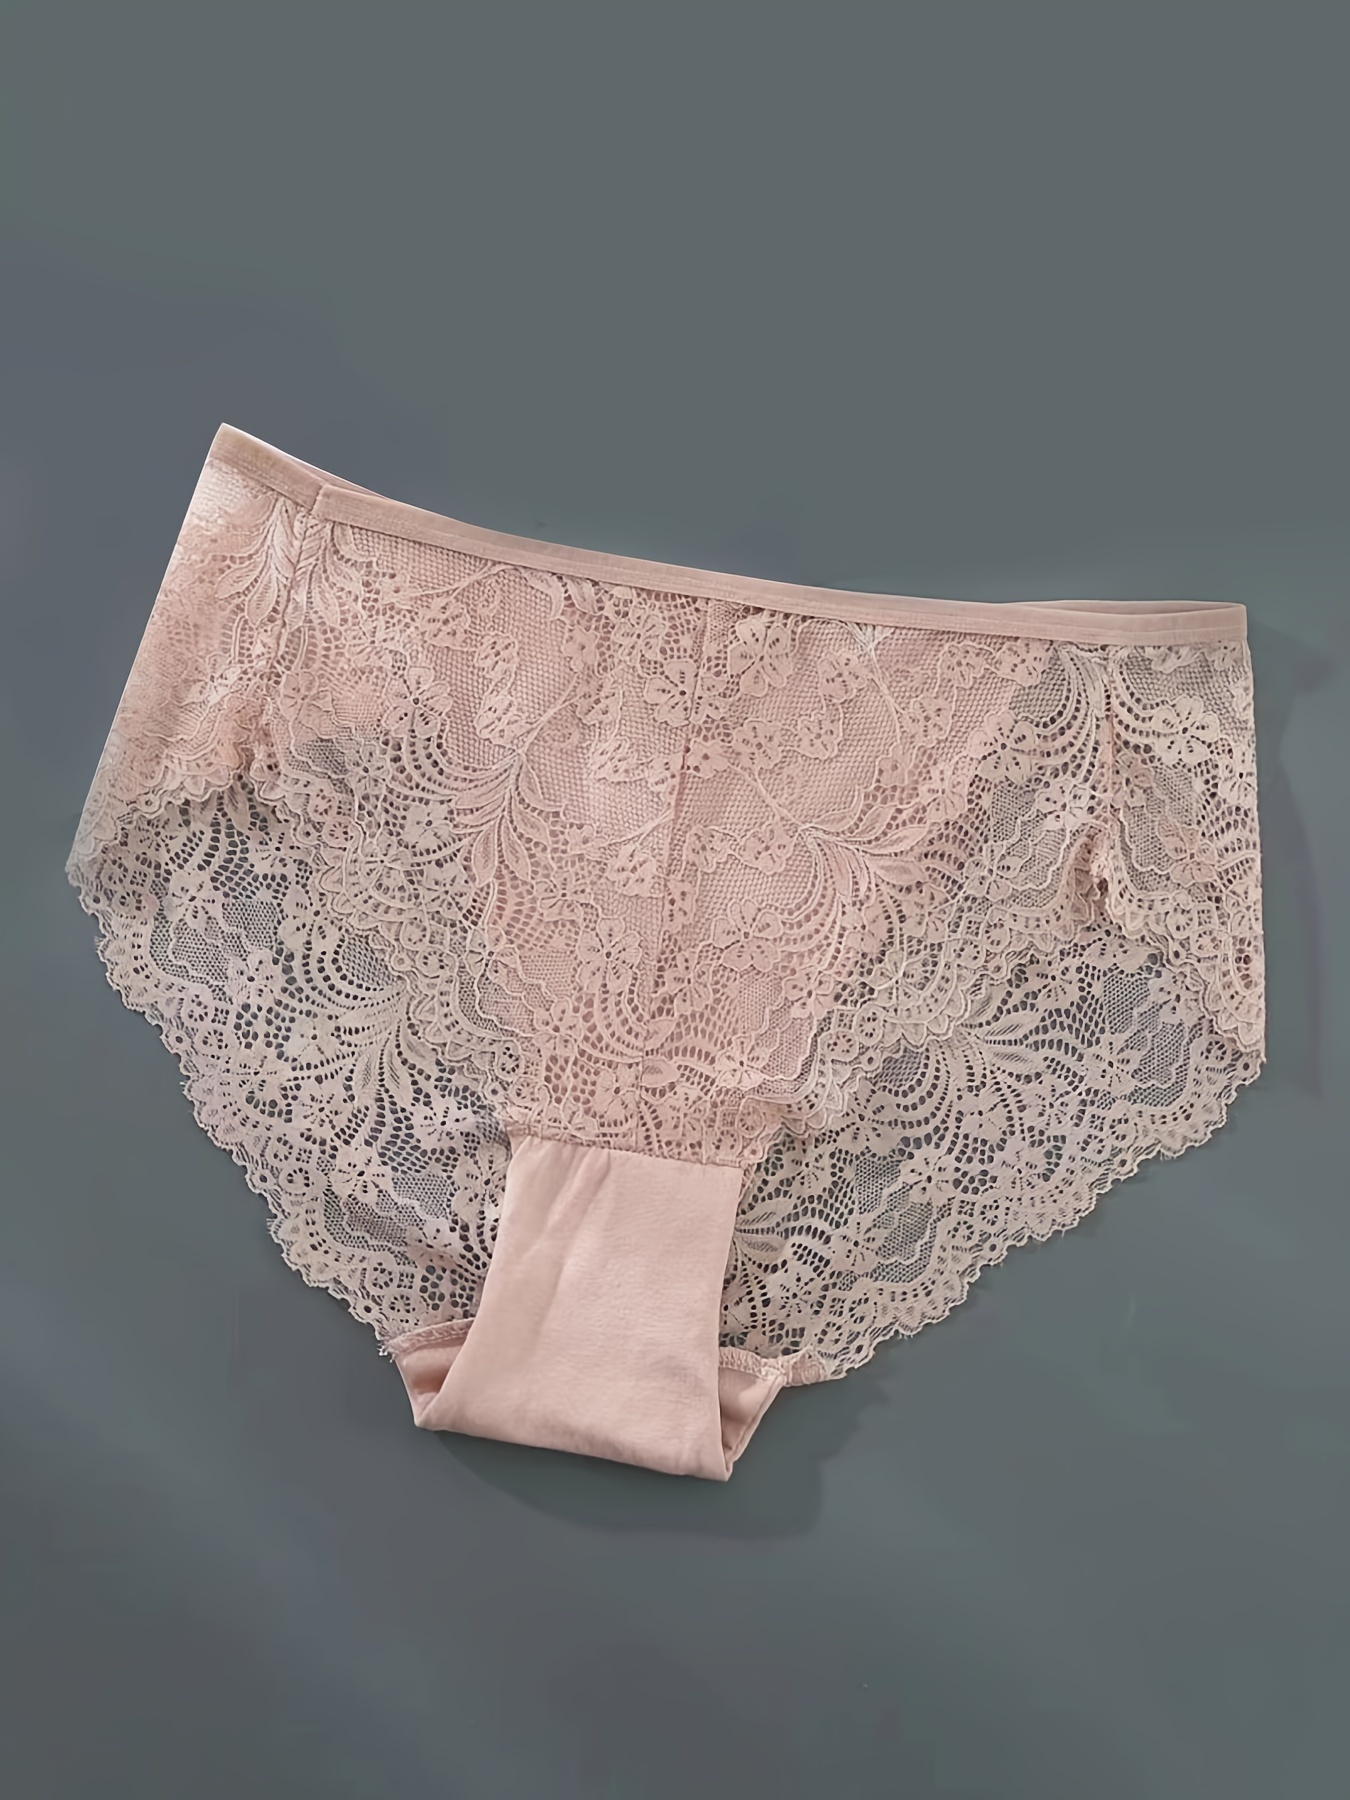 Lace Underwear  Lace Panties - Sexy Lace Women's Panties Mesh